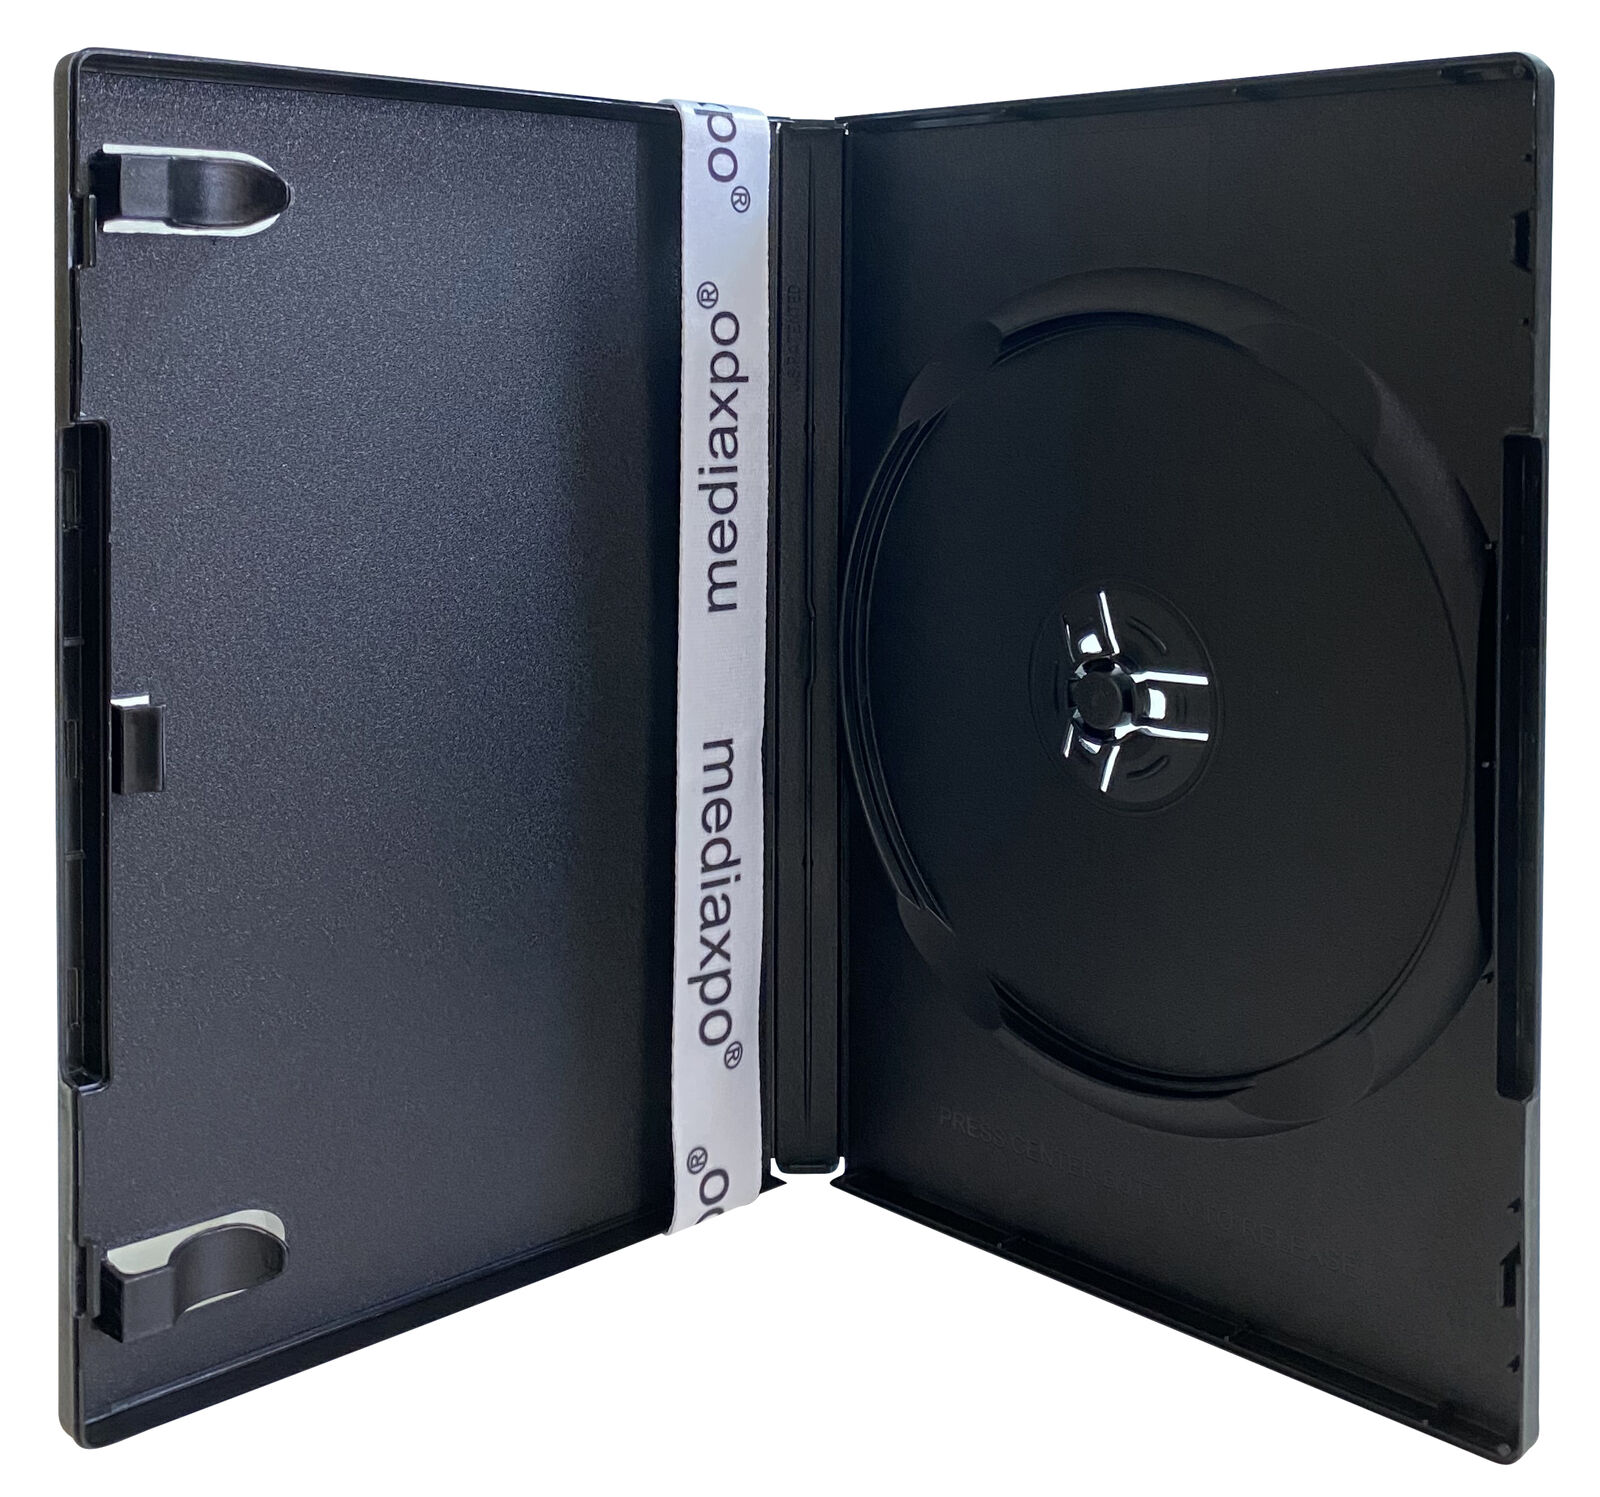 PREMIUM STANDARD Black Single DVD Cases 14MM (100% New Material) Lot